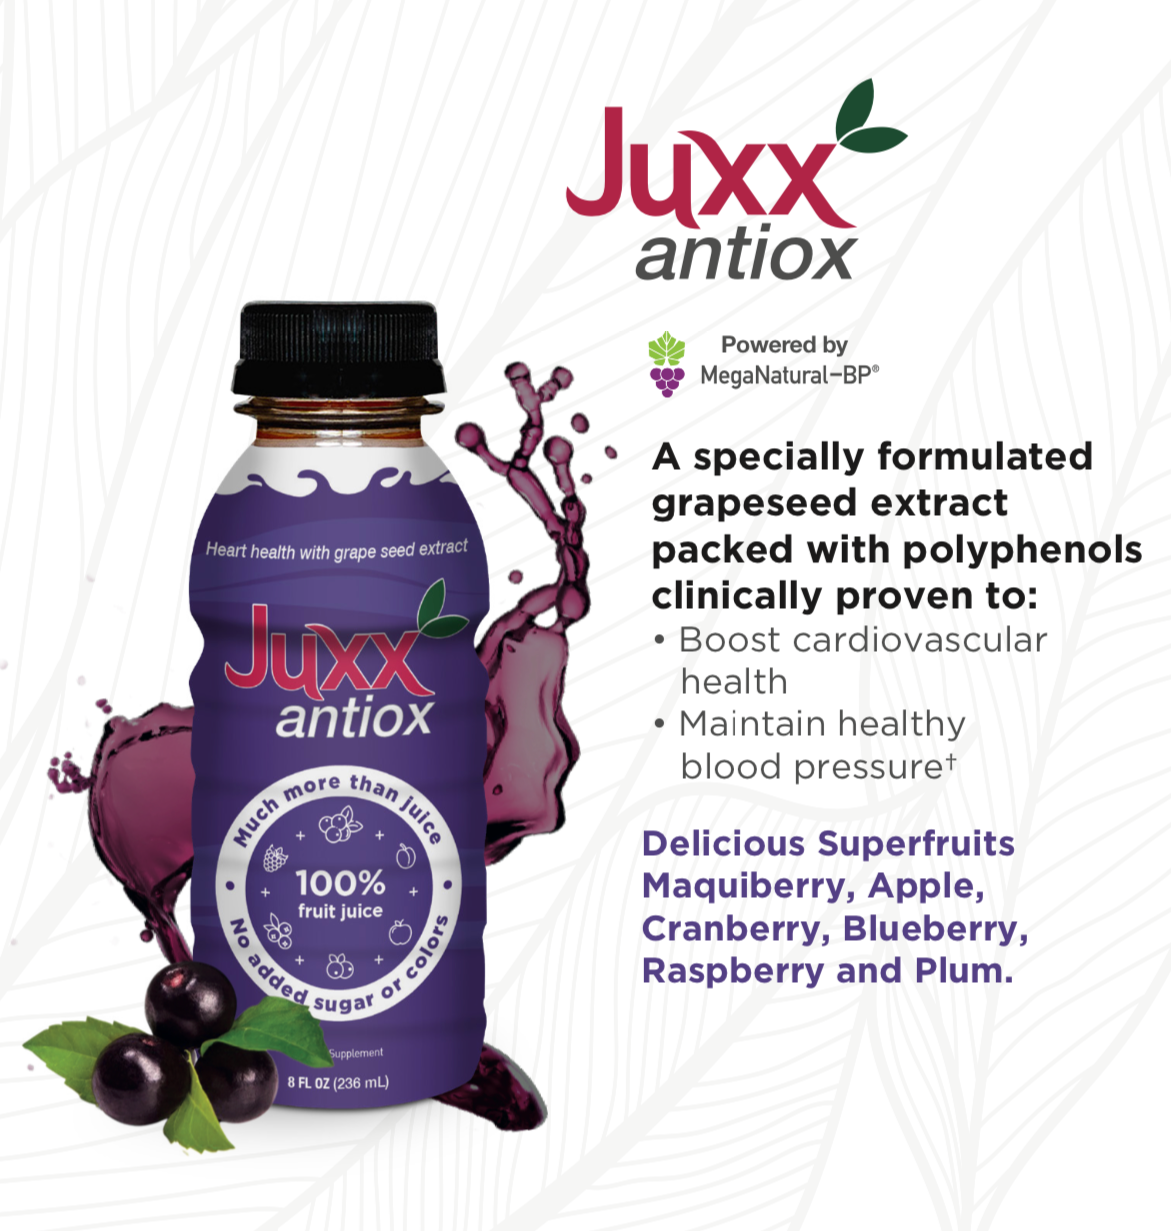 JUXX Pallet - Antiox Juice with MegaNatural-BP